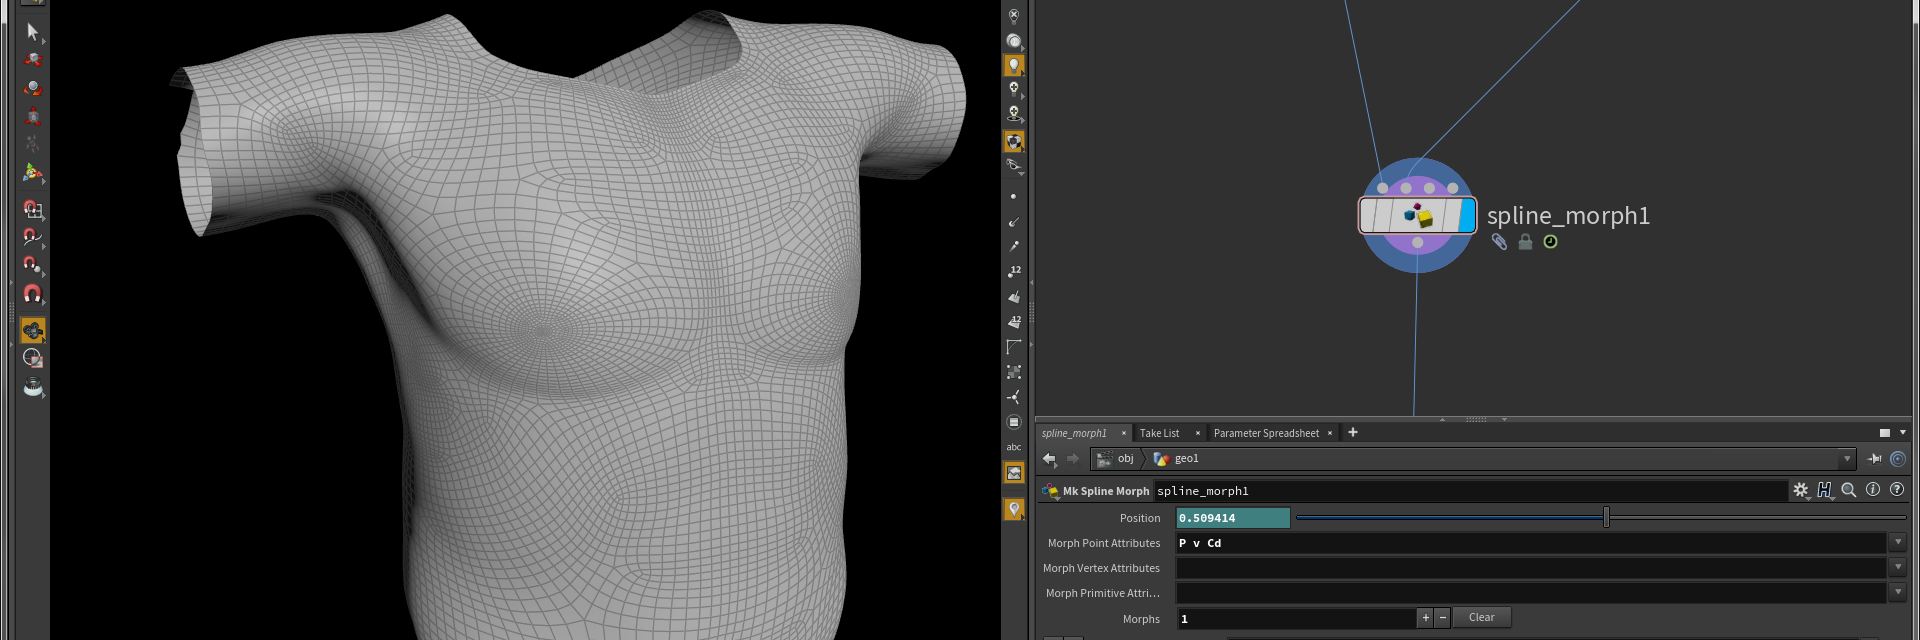 SideFx Houdini Screenshot with body model